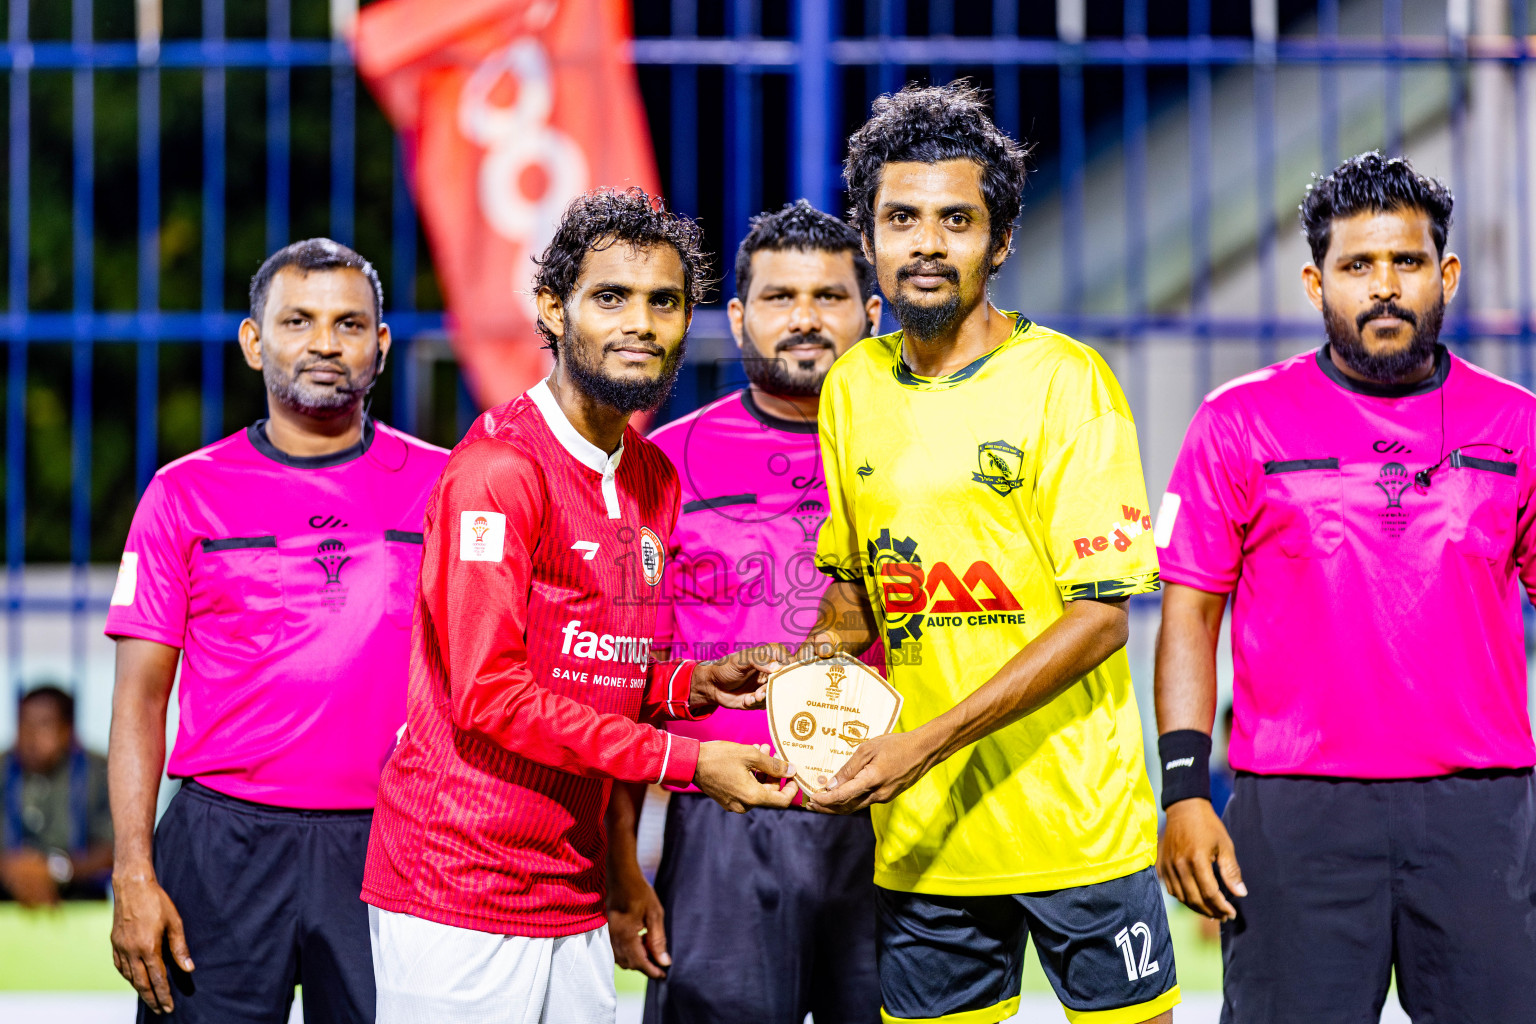 CC Sports Club vs Vela Sports Club in Day 7 of Eydhafushi Futsal Cup 2024 was held on Sunday , 14th April 2024, in B Eydhafushi, Maldives Photos: Nausham Waheed / images.mv